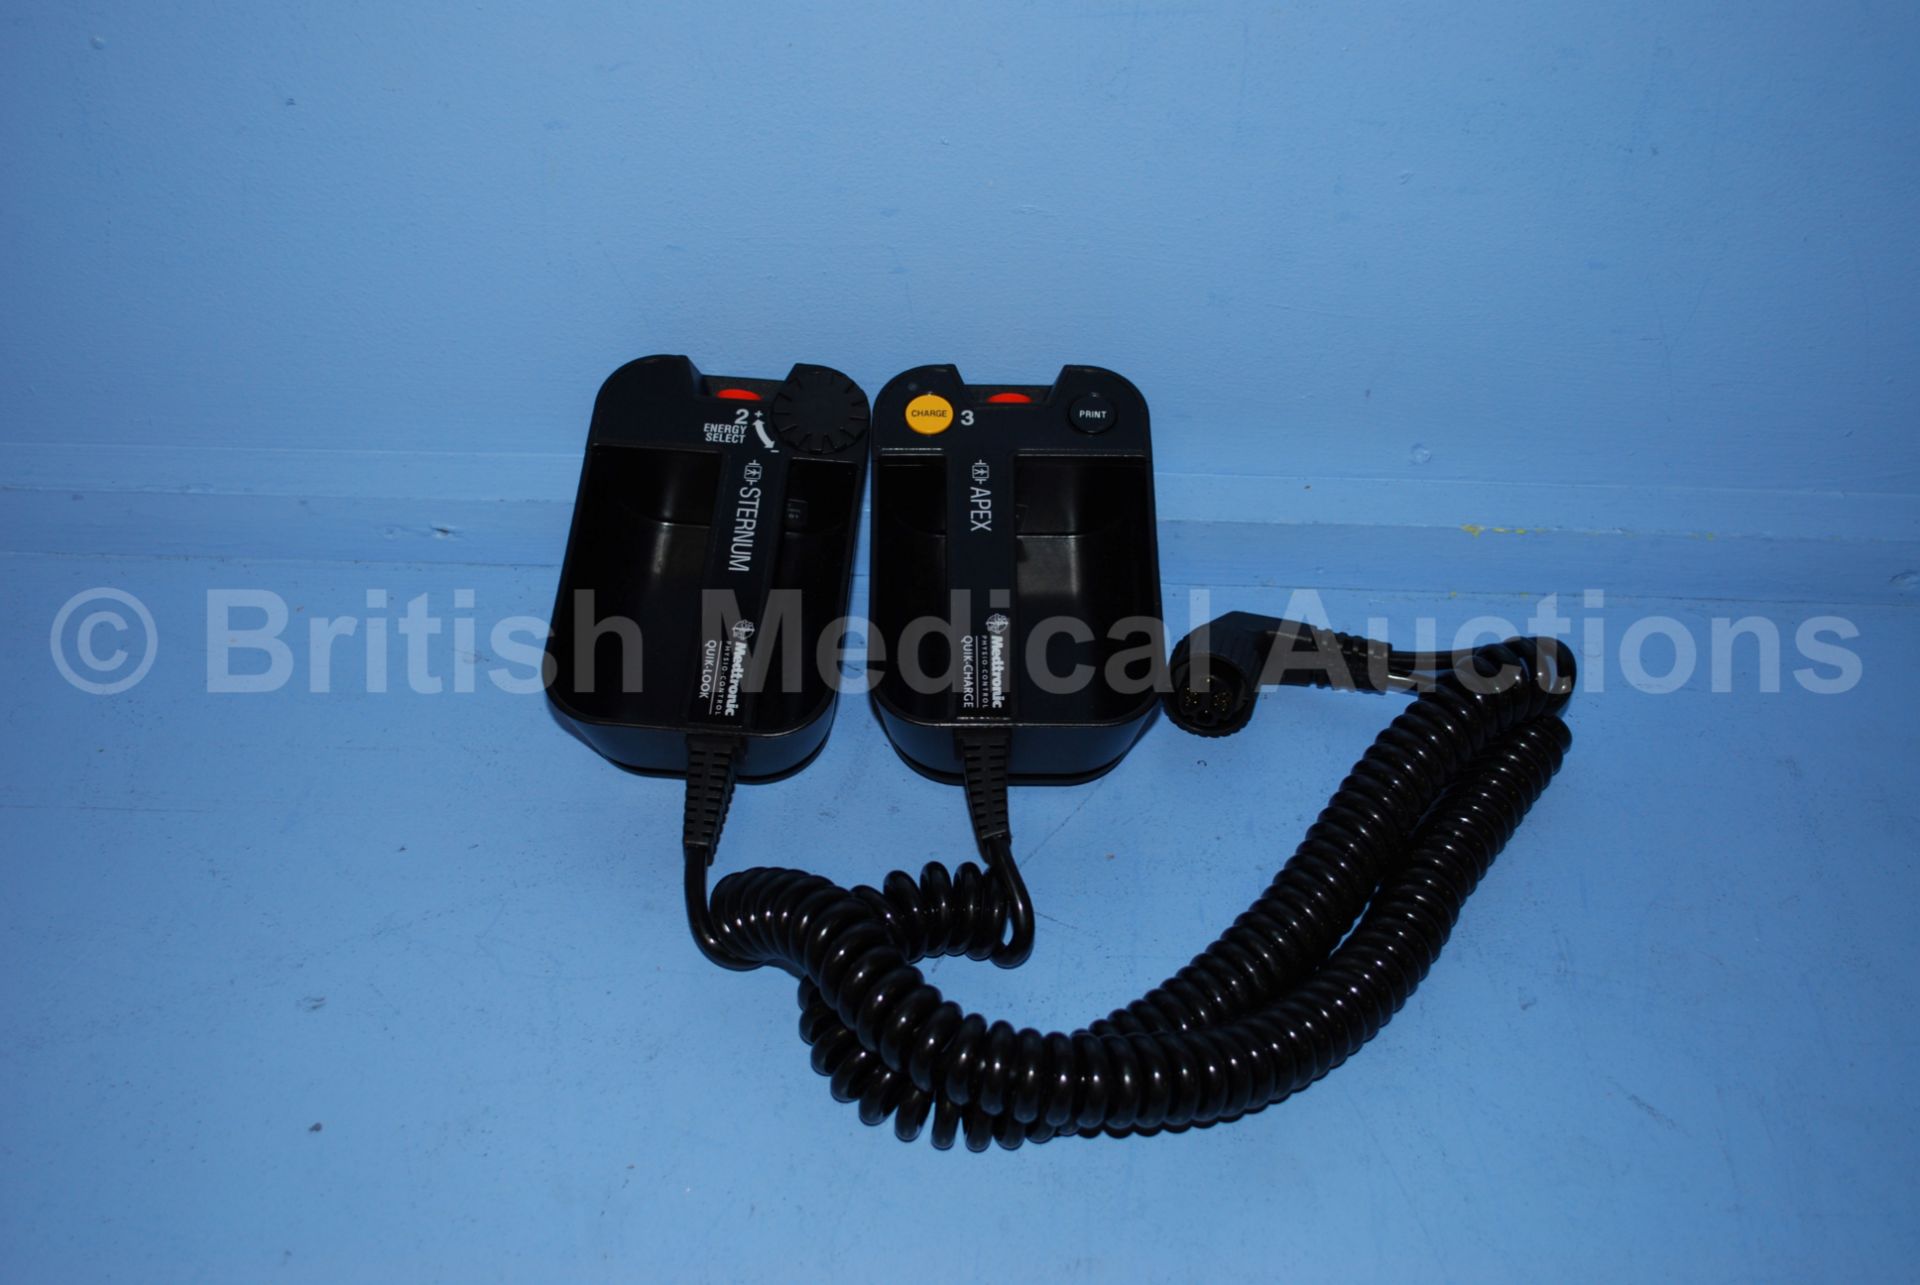 Medtronic Physio-Control Defibrillator Hard Paddle - Image 2 of 2